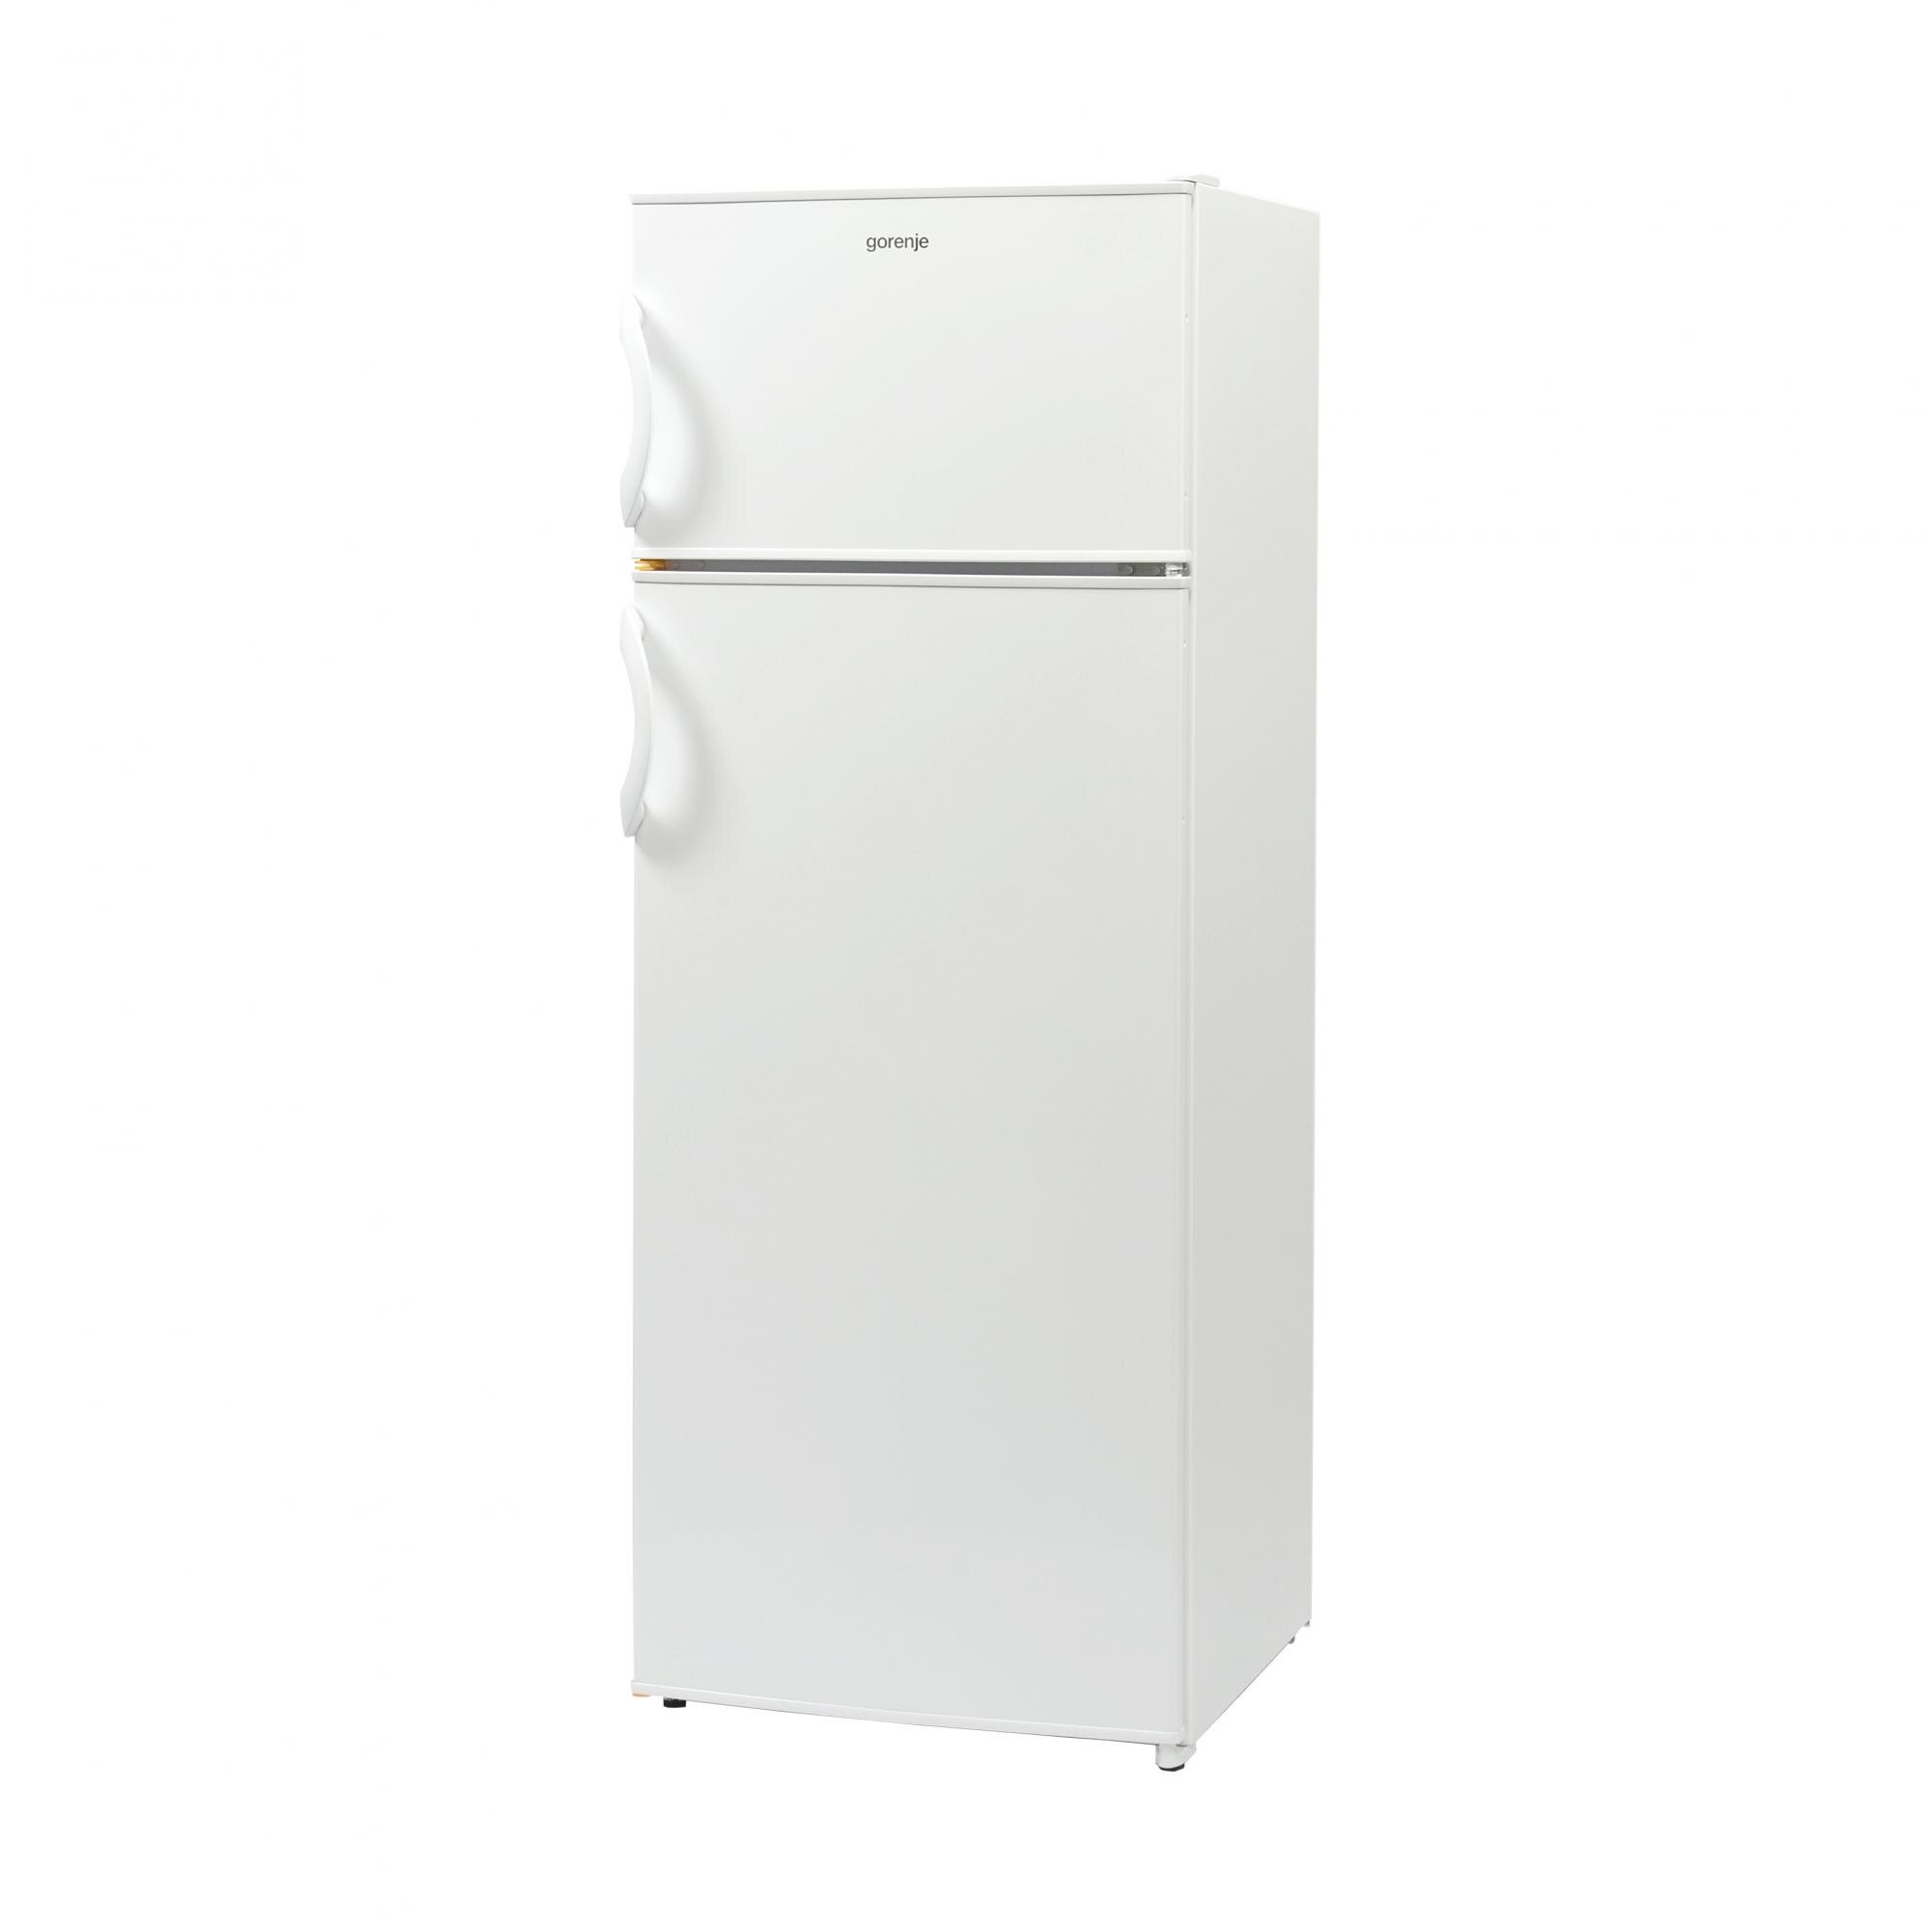 Хладилник Gorenje RF4141AW с обем от 232 л.